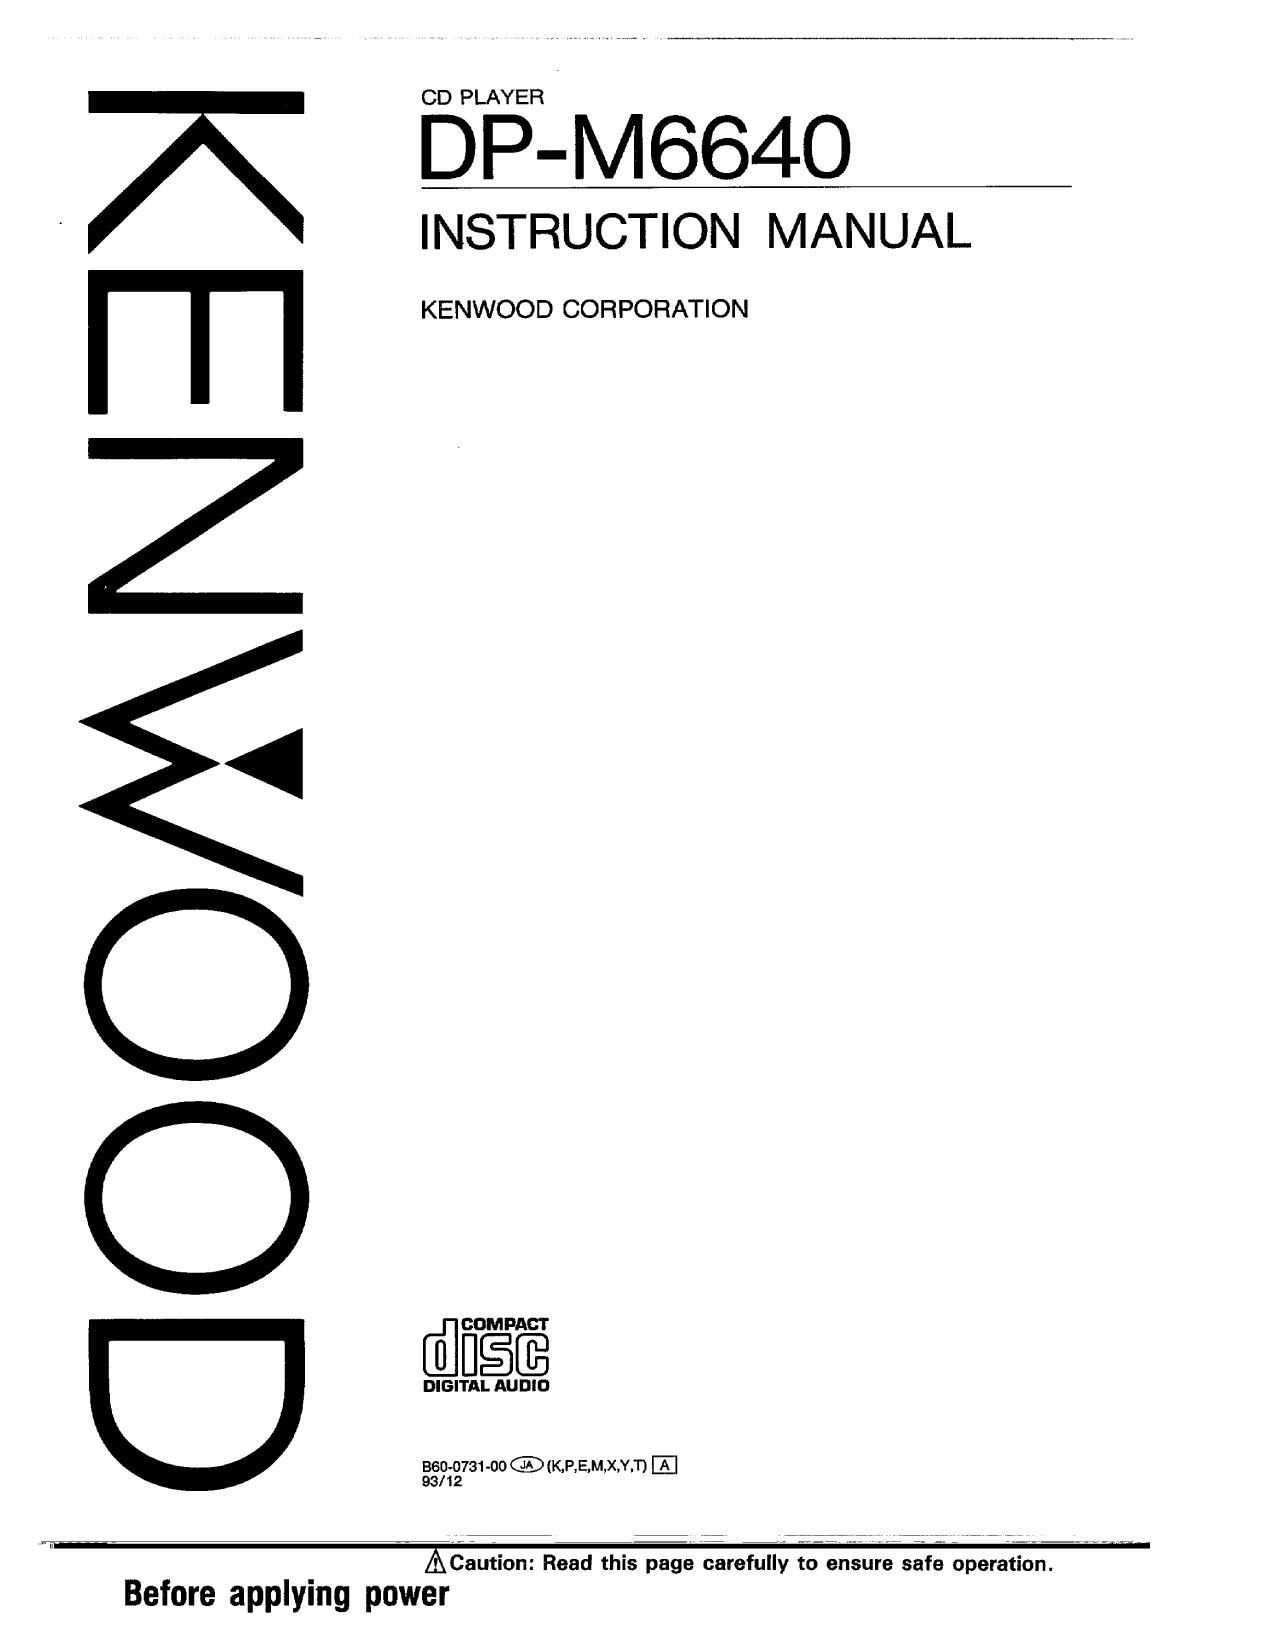 Kenwood DPM 6640 Owners Manual